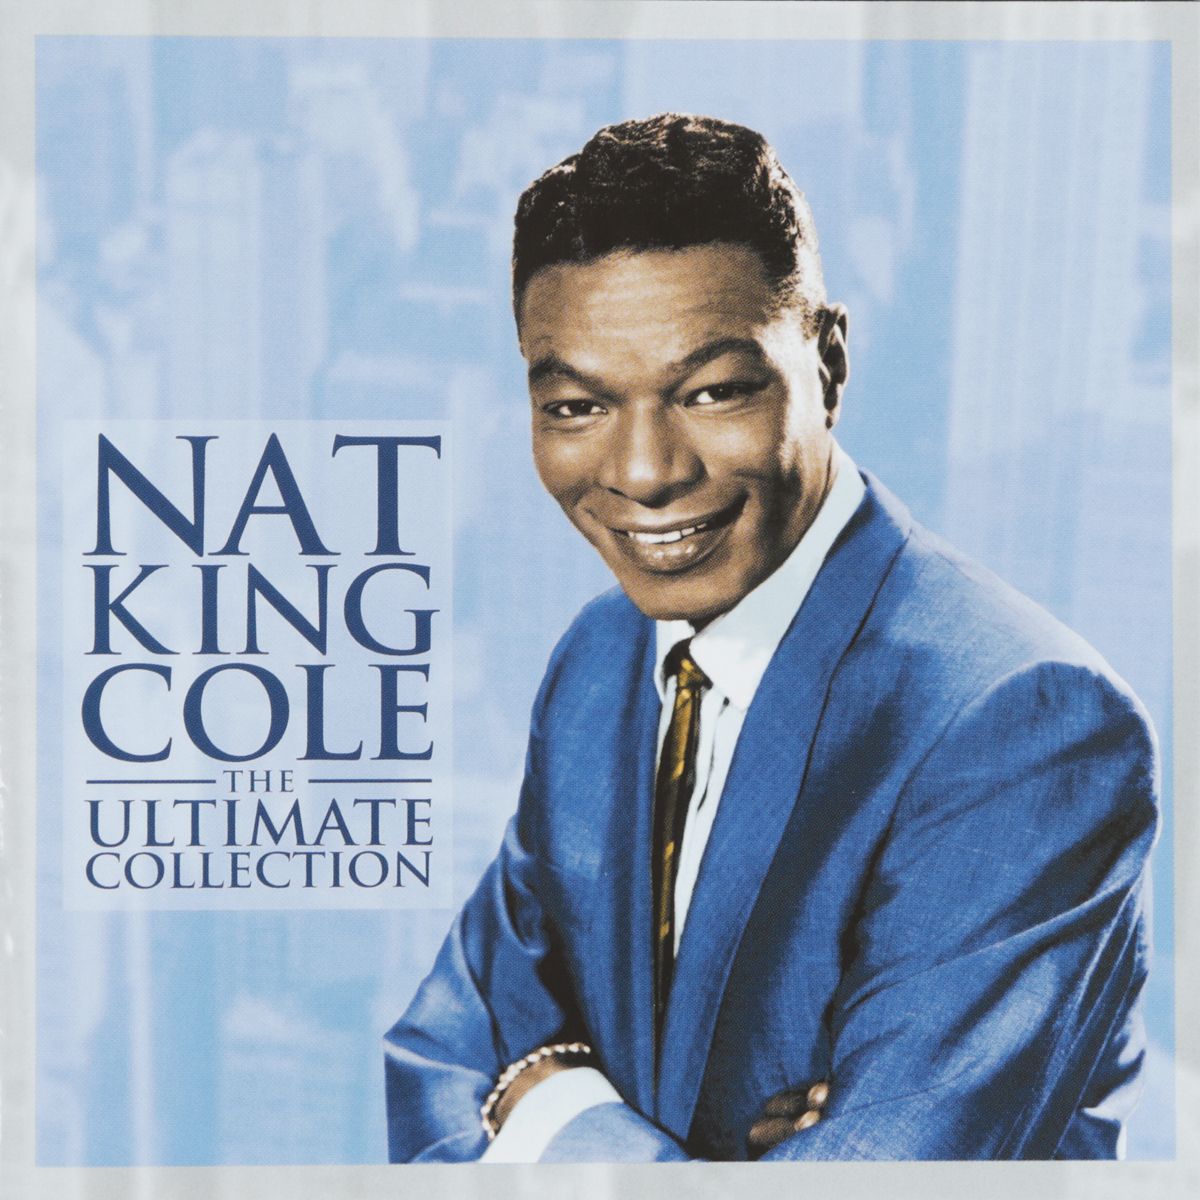 Короле ната. Нат Кинг Коул. Нэт Кинг Ко́ул. Нэт Кинг Коул – тема. Nat King Cole дискография.